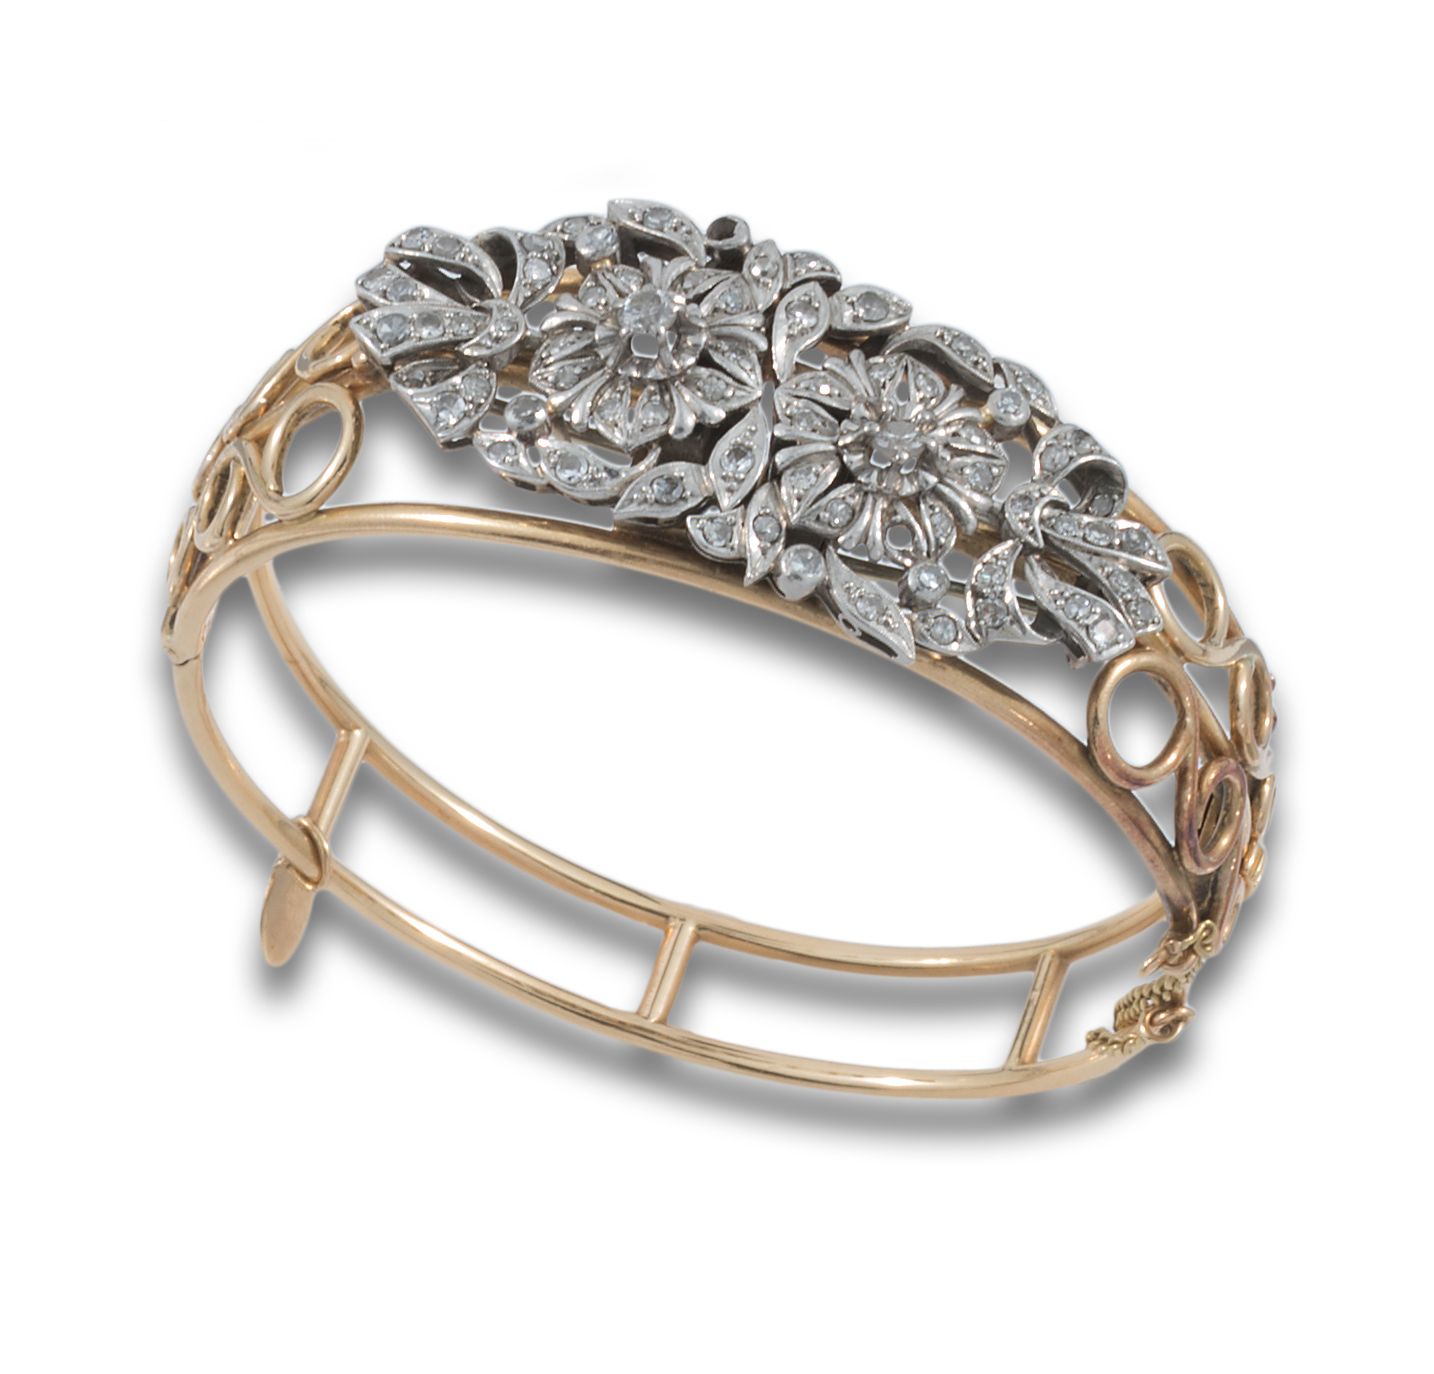 Rigid antique bracelet 刚性的古董手镯，带有可拆卸的双夹扣，由18K黄金和铂金制成，由一个镶有钻石的板子形成，古老而简单的切割。